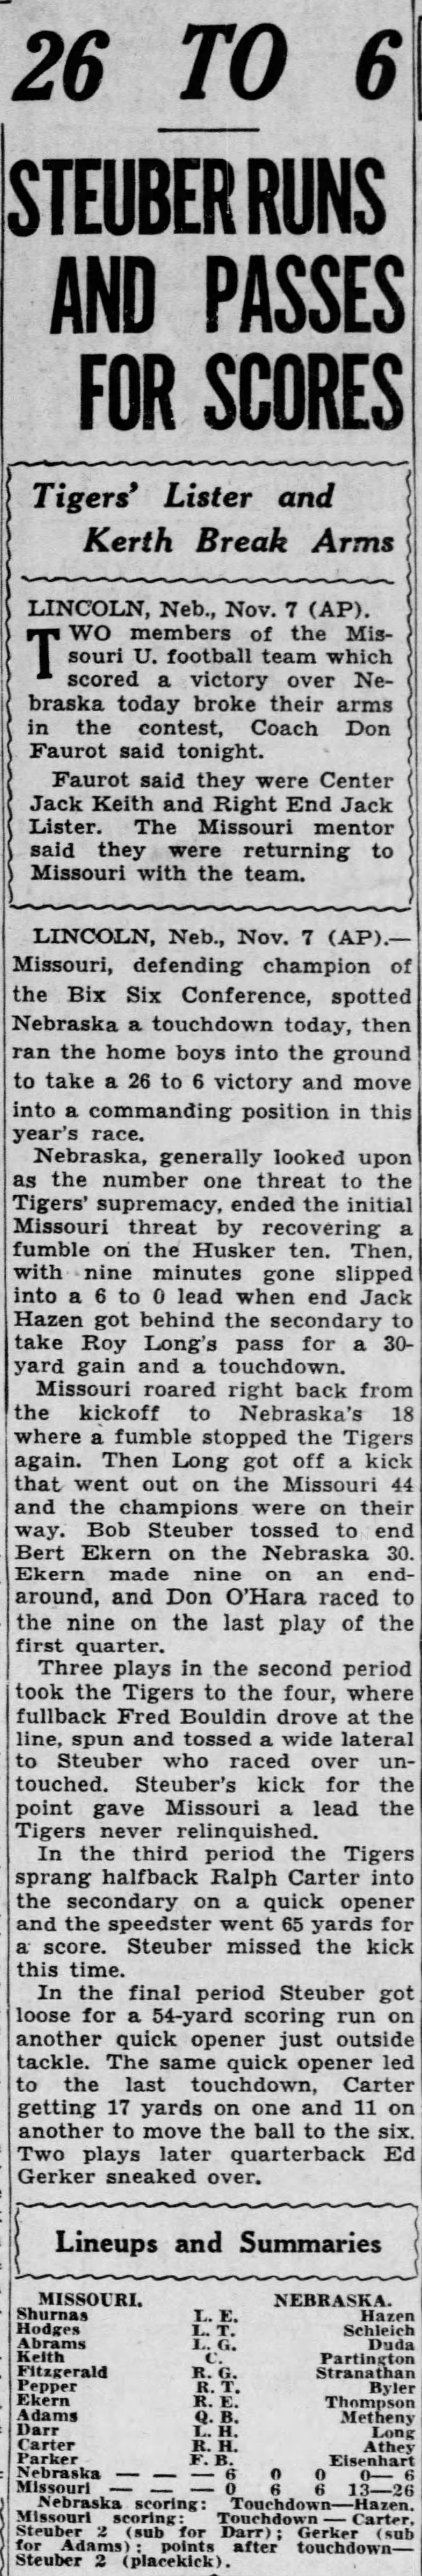 1942 Nebraska-Missouri AP